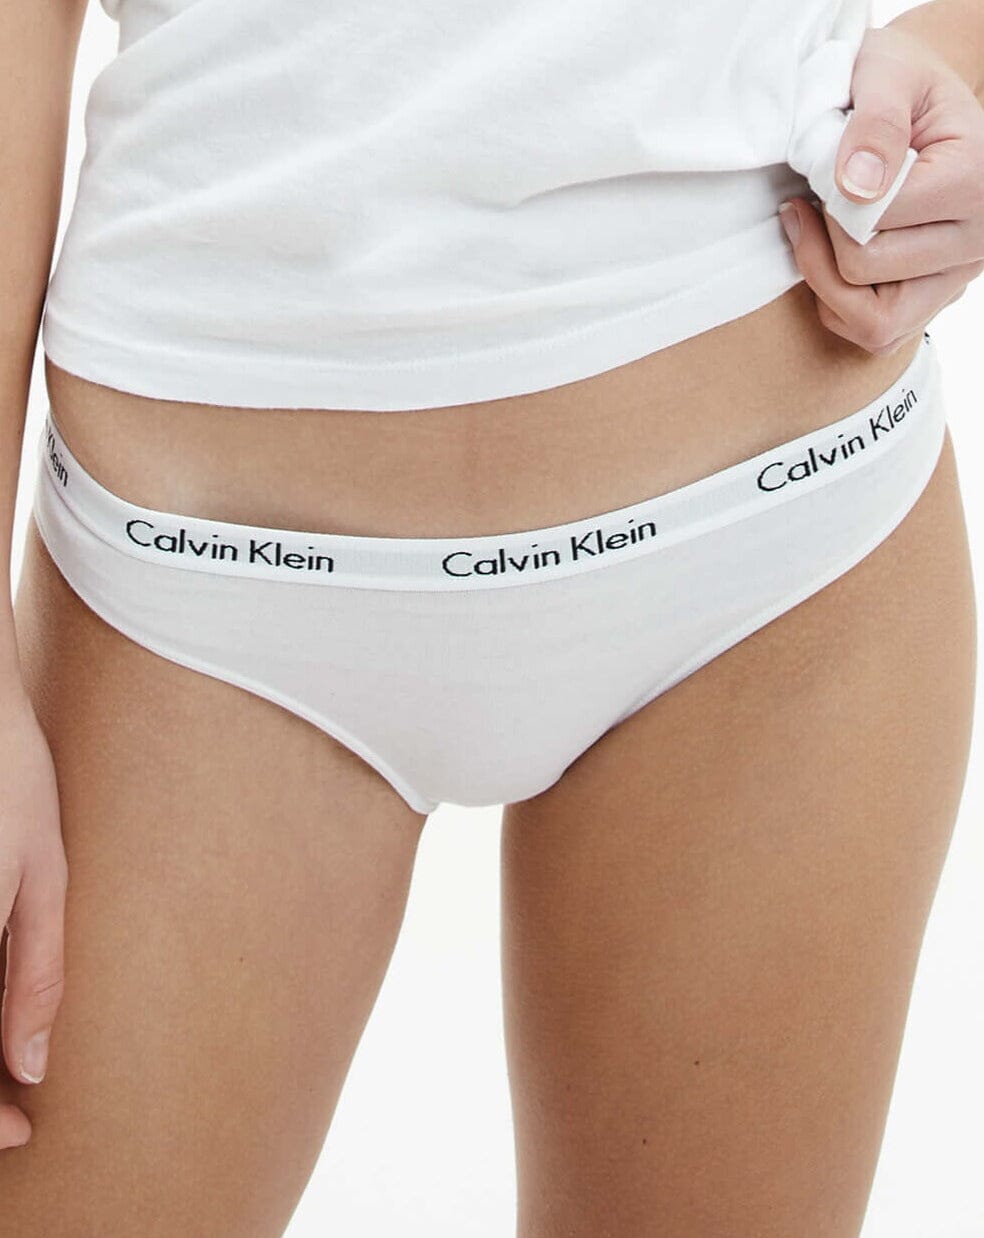 Calvin Klein Underwear Women's Carousel 3 Pack Panties, Multi, X